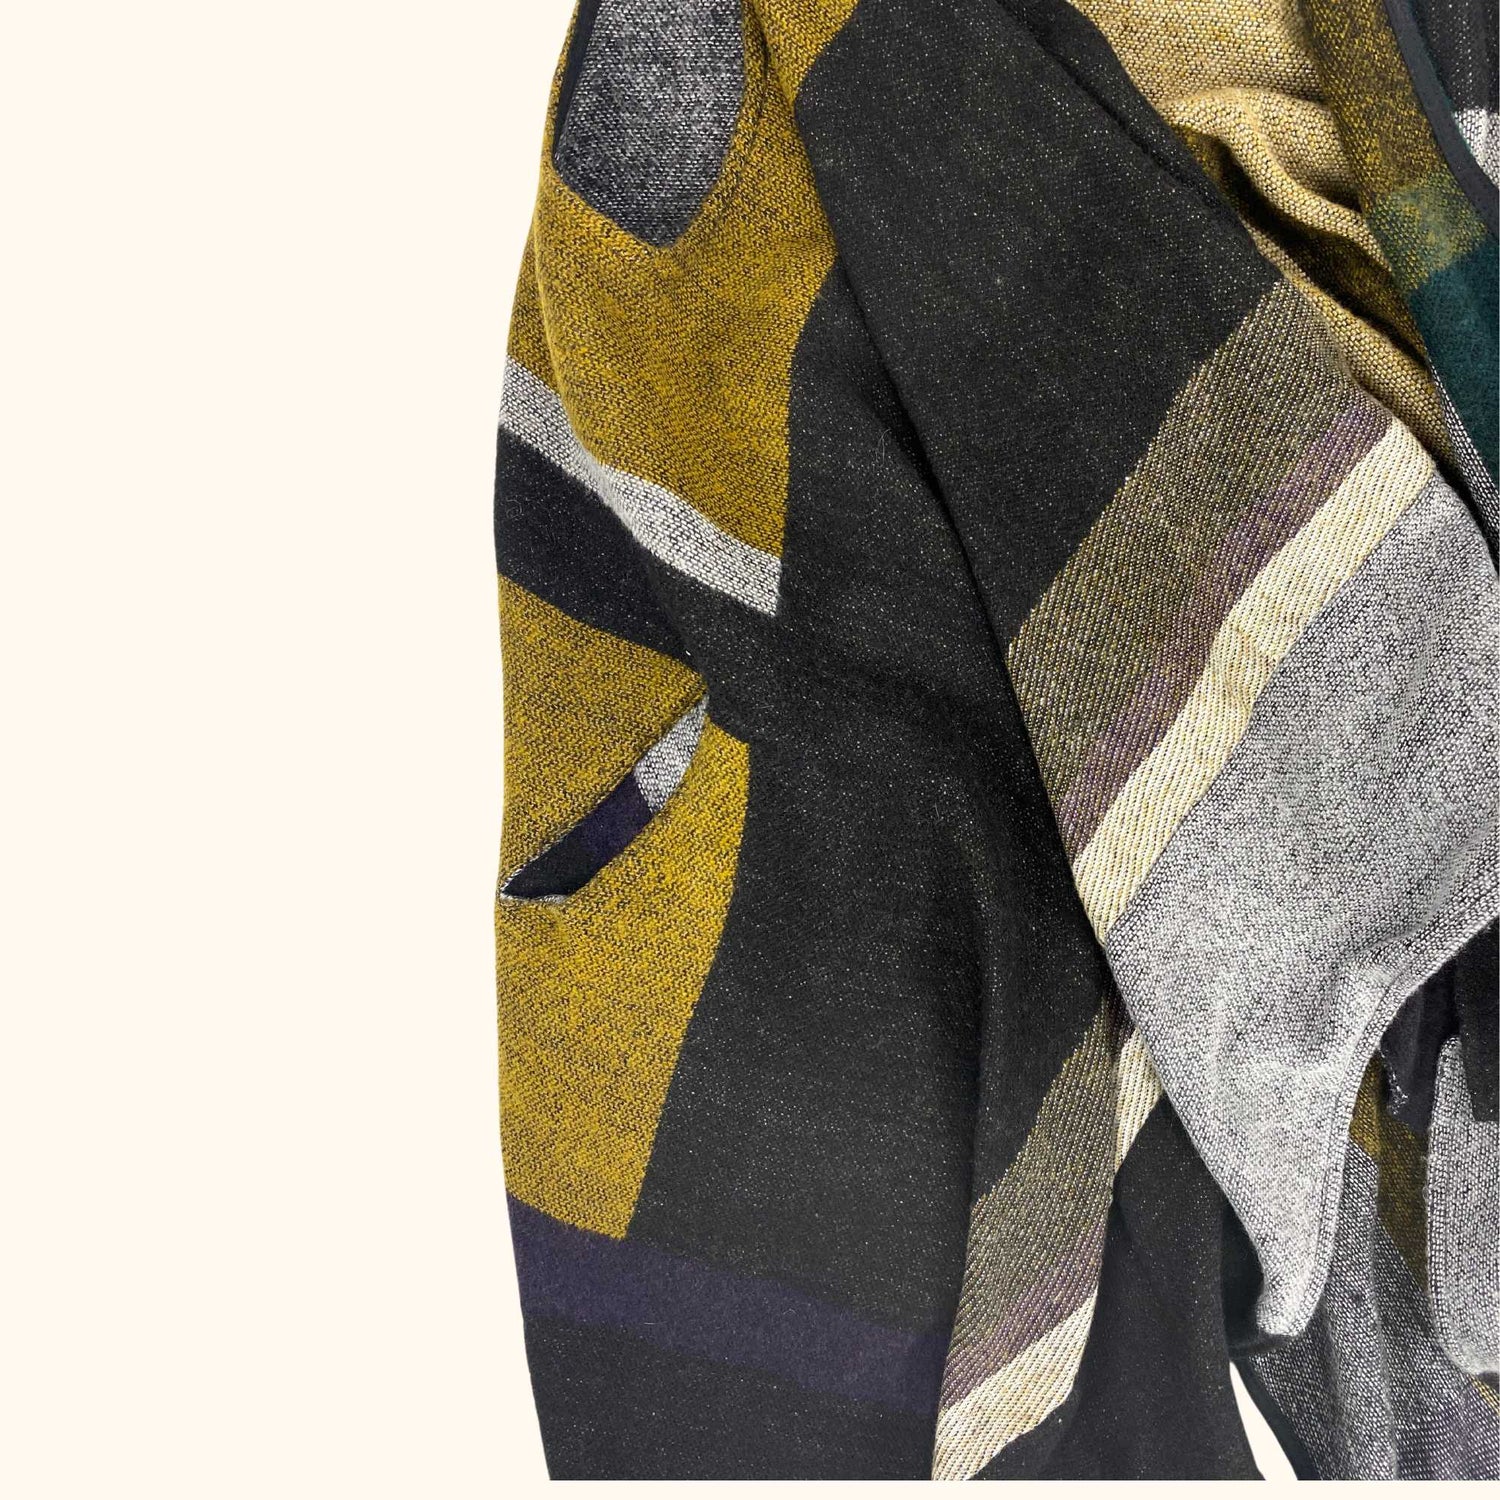 River Island Wool Blend Longline Kimono - Size Medium - River Island - Coats &amp; jackets